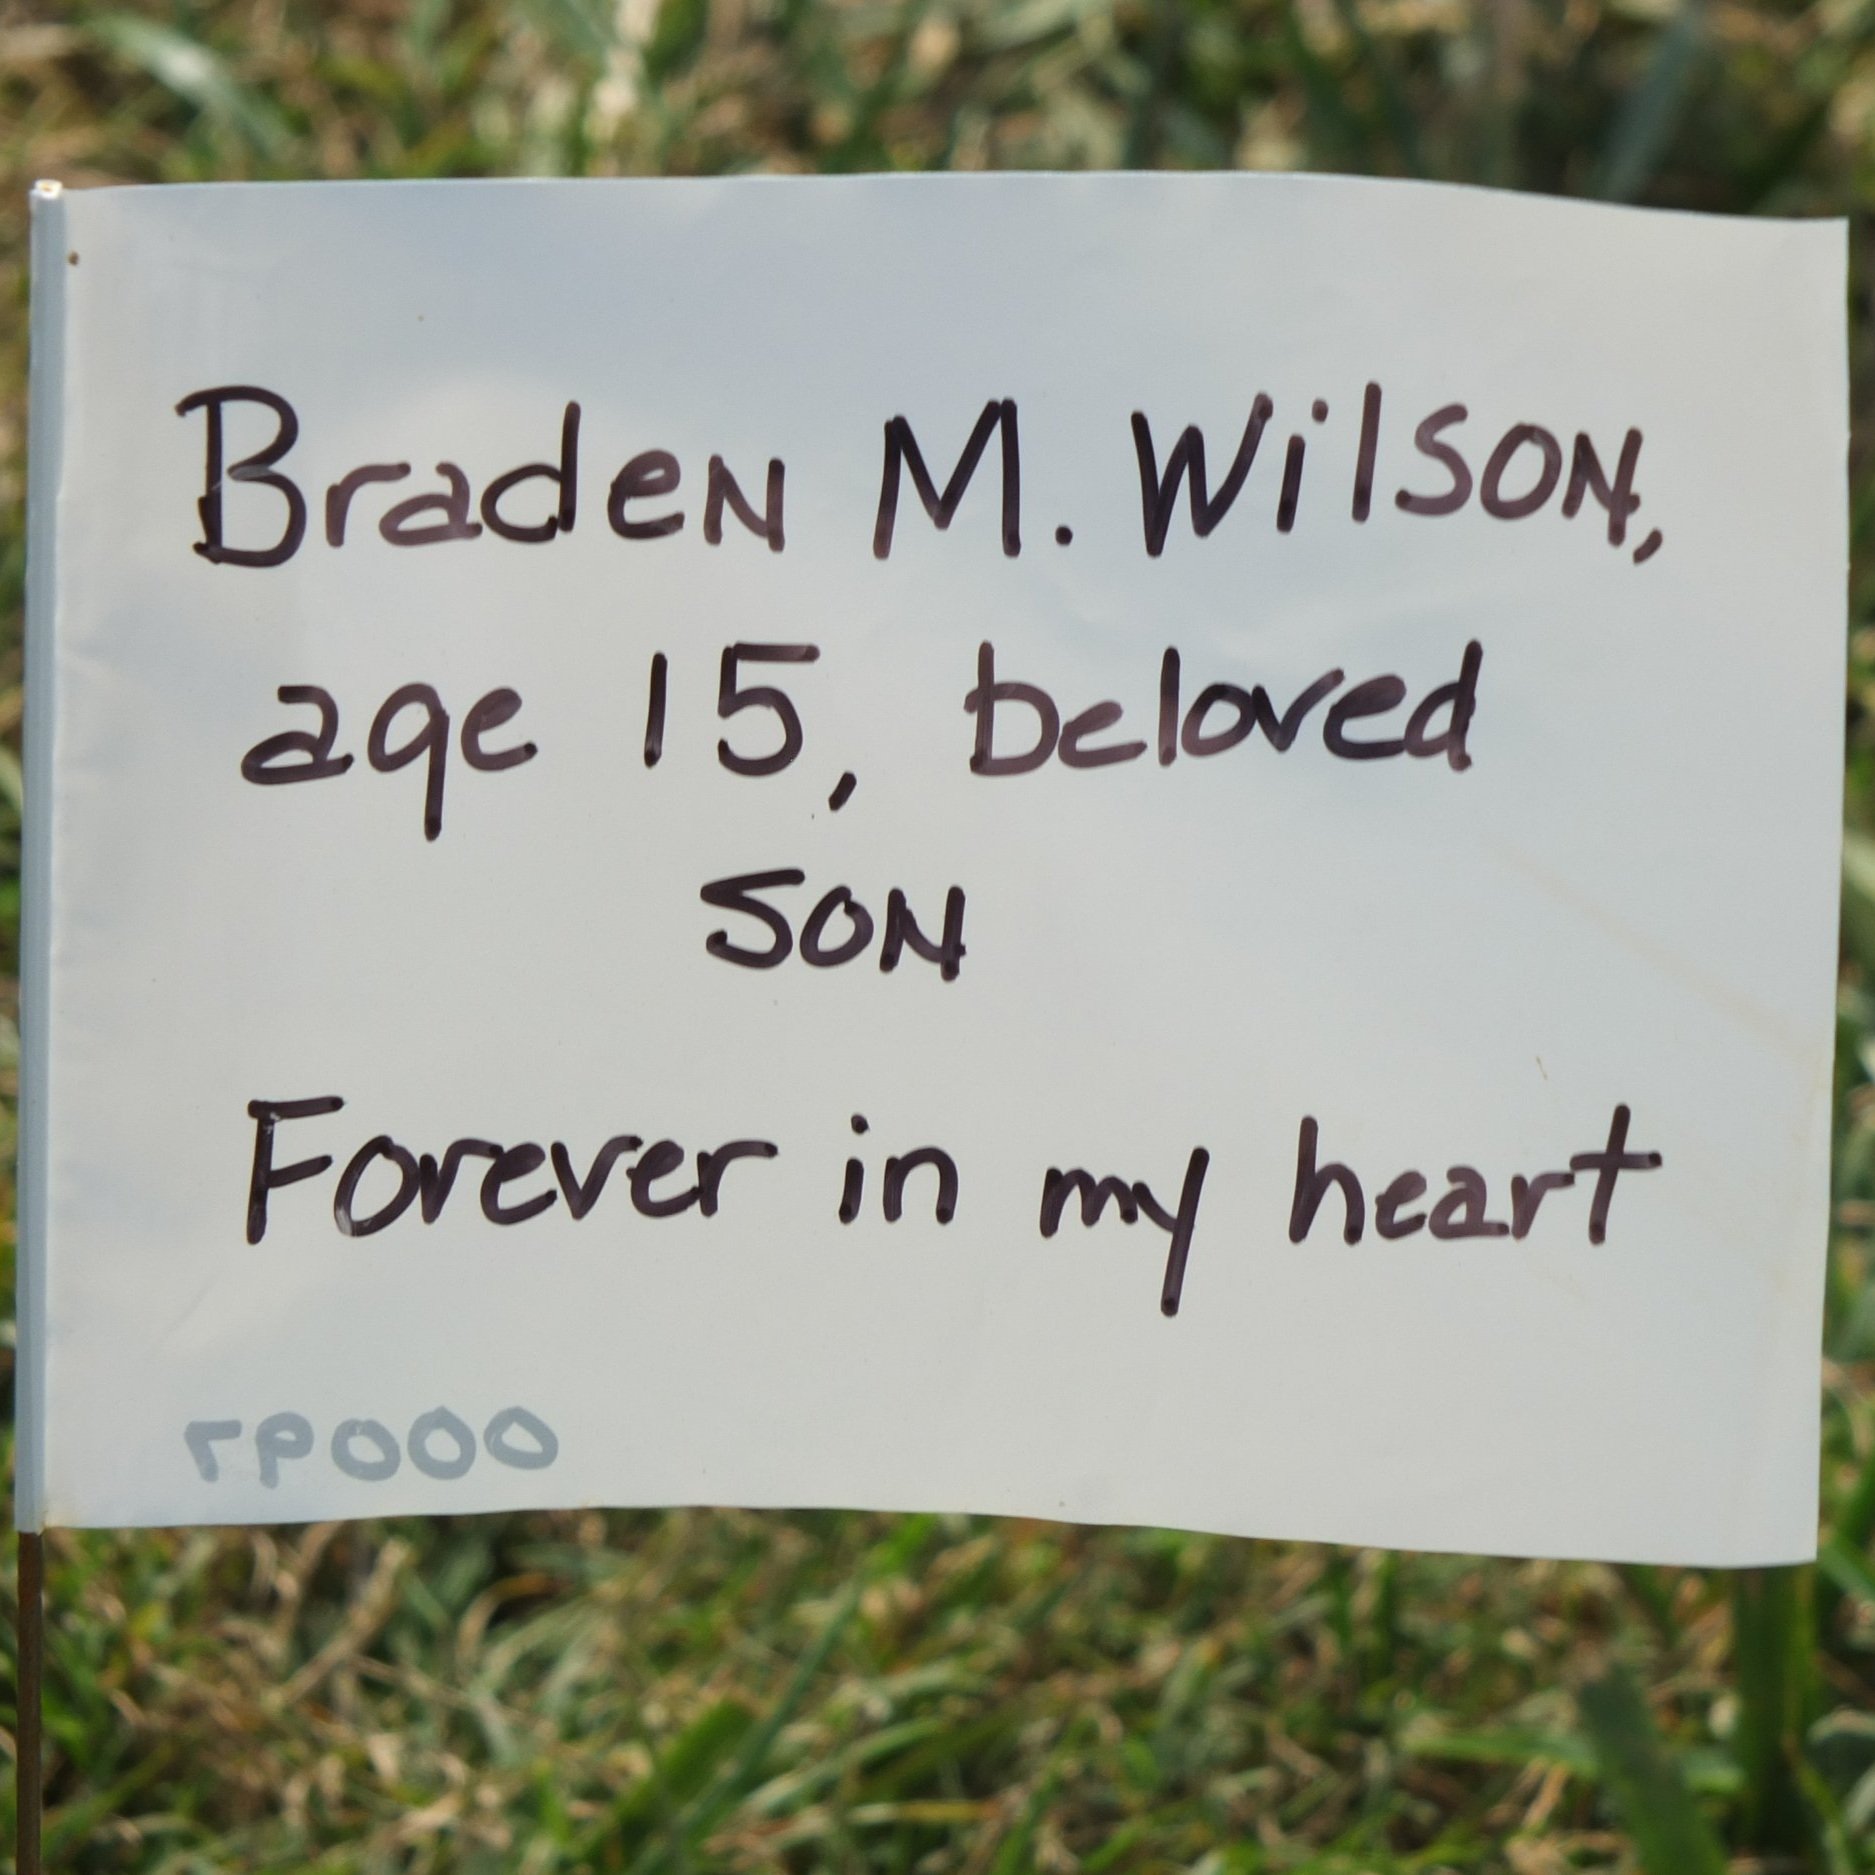 Braden+Wilson+age+15+CredBG_210920_360+copy.jpg